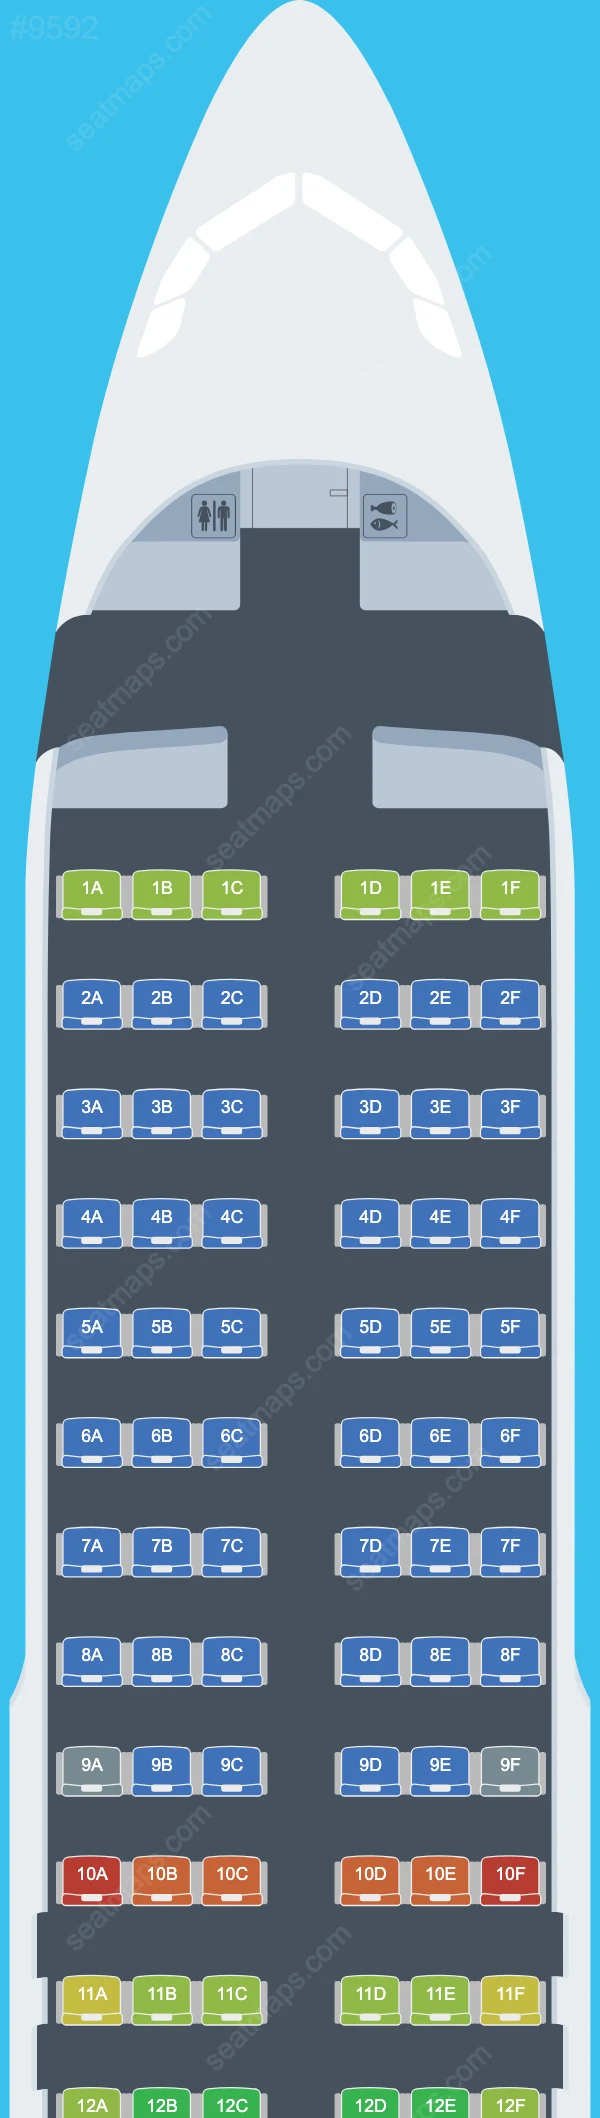 British Airways Airbus A320 Seat Maps A320-200 V.1